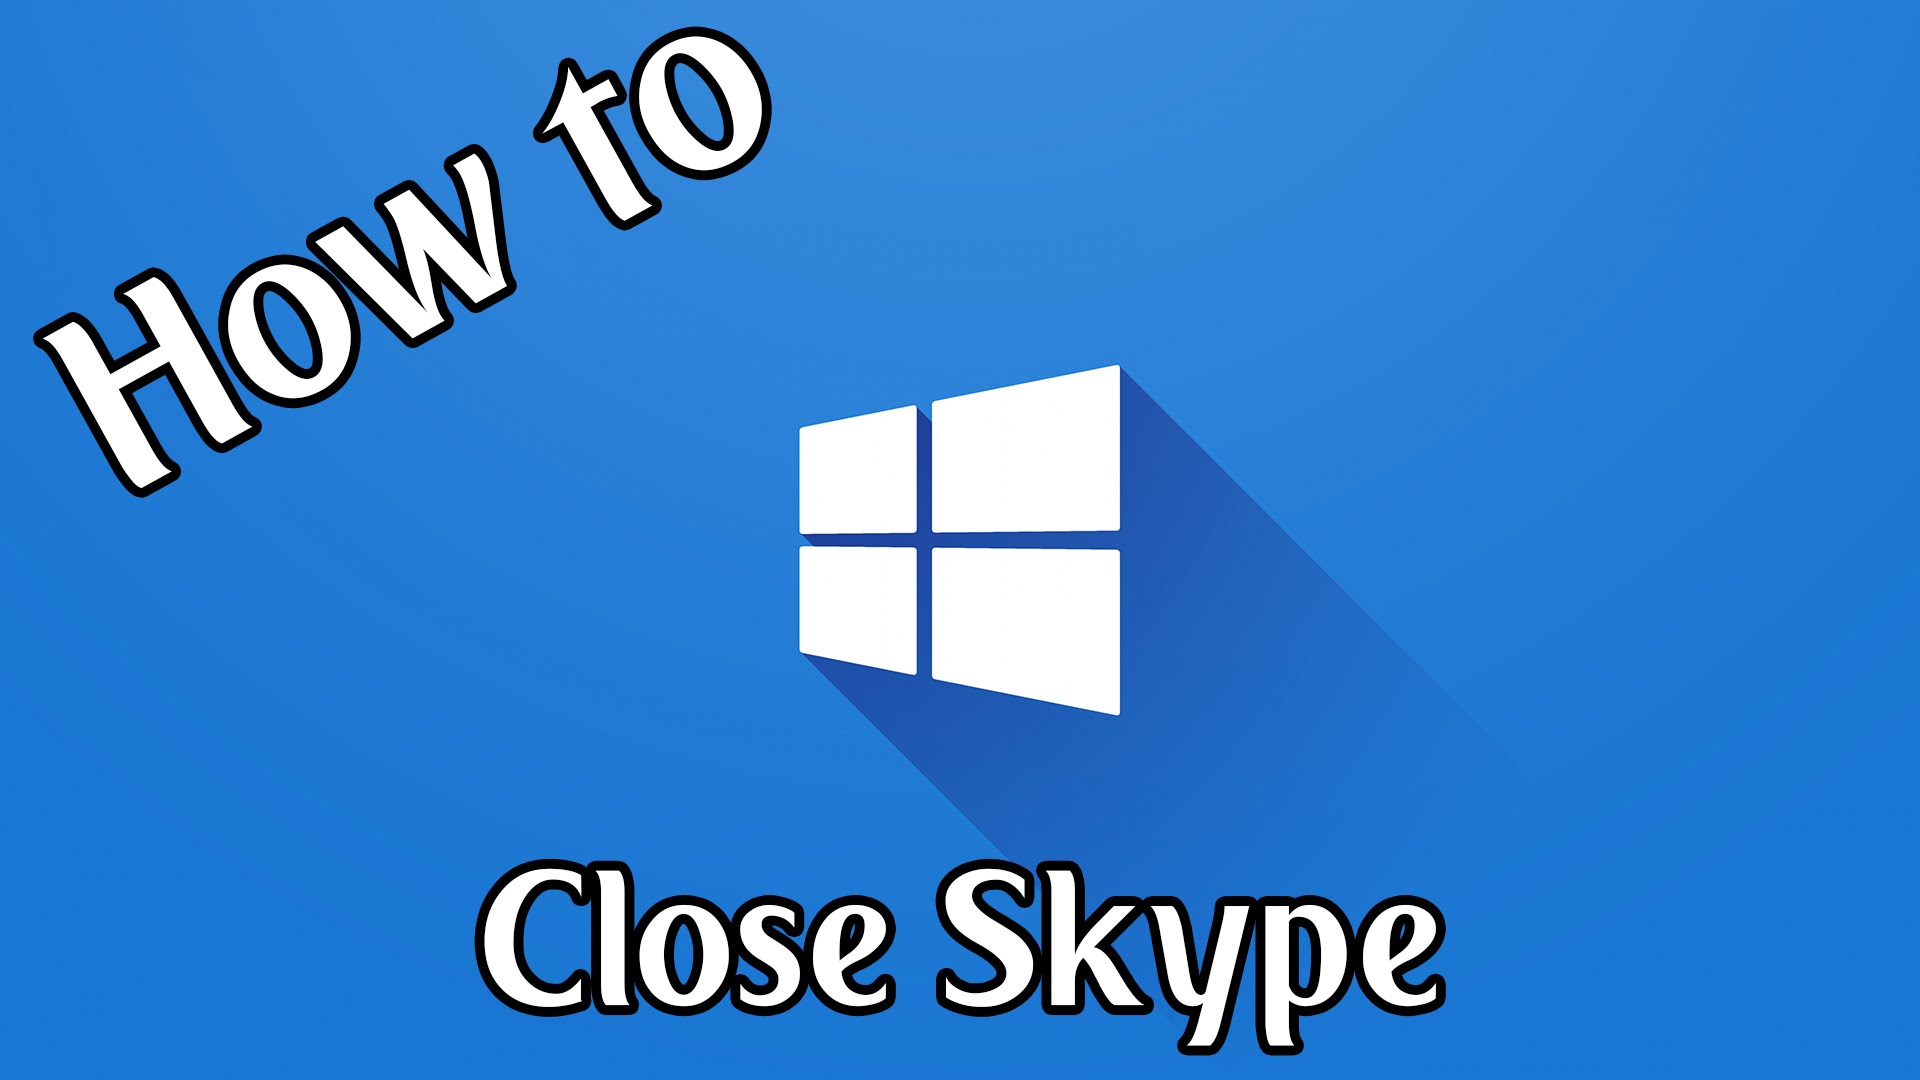 How To Close Skype in Windows 10